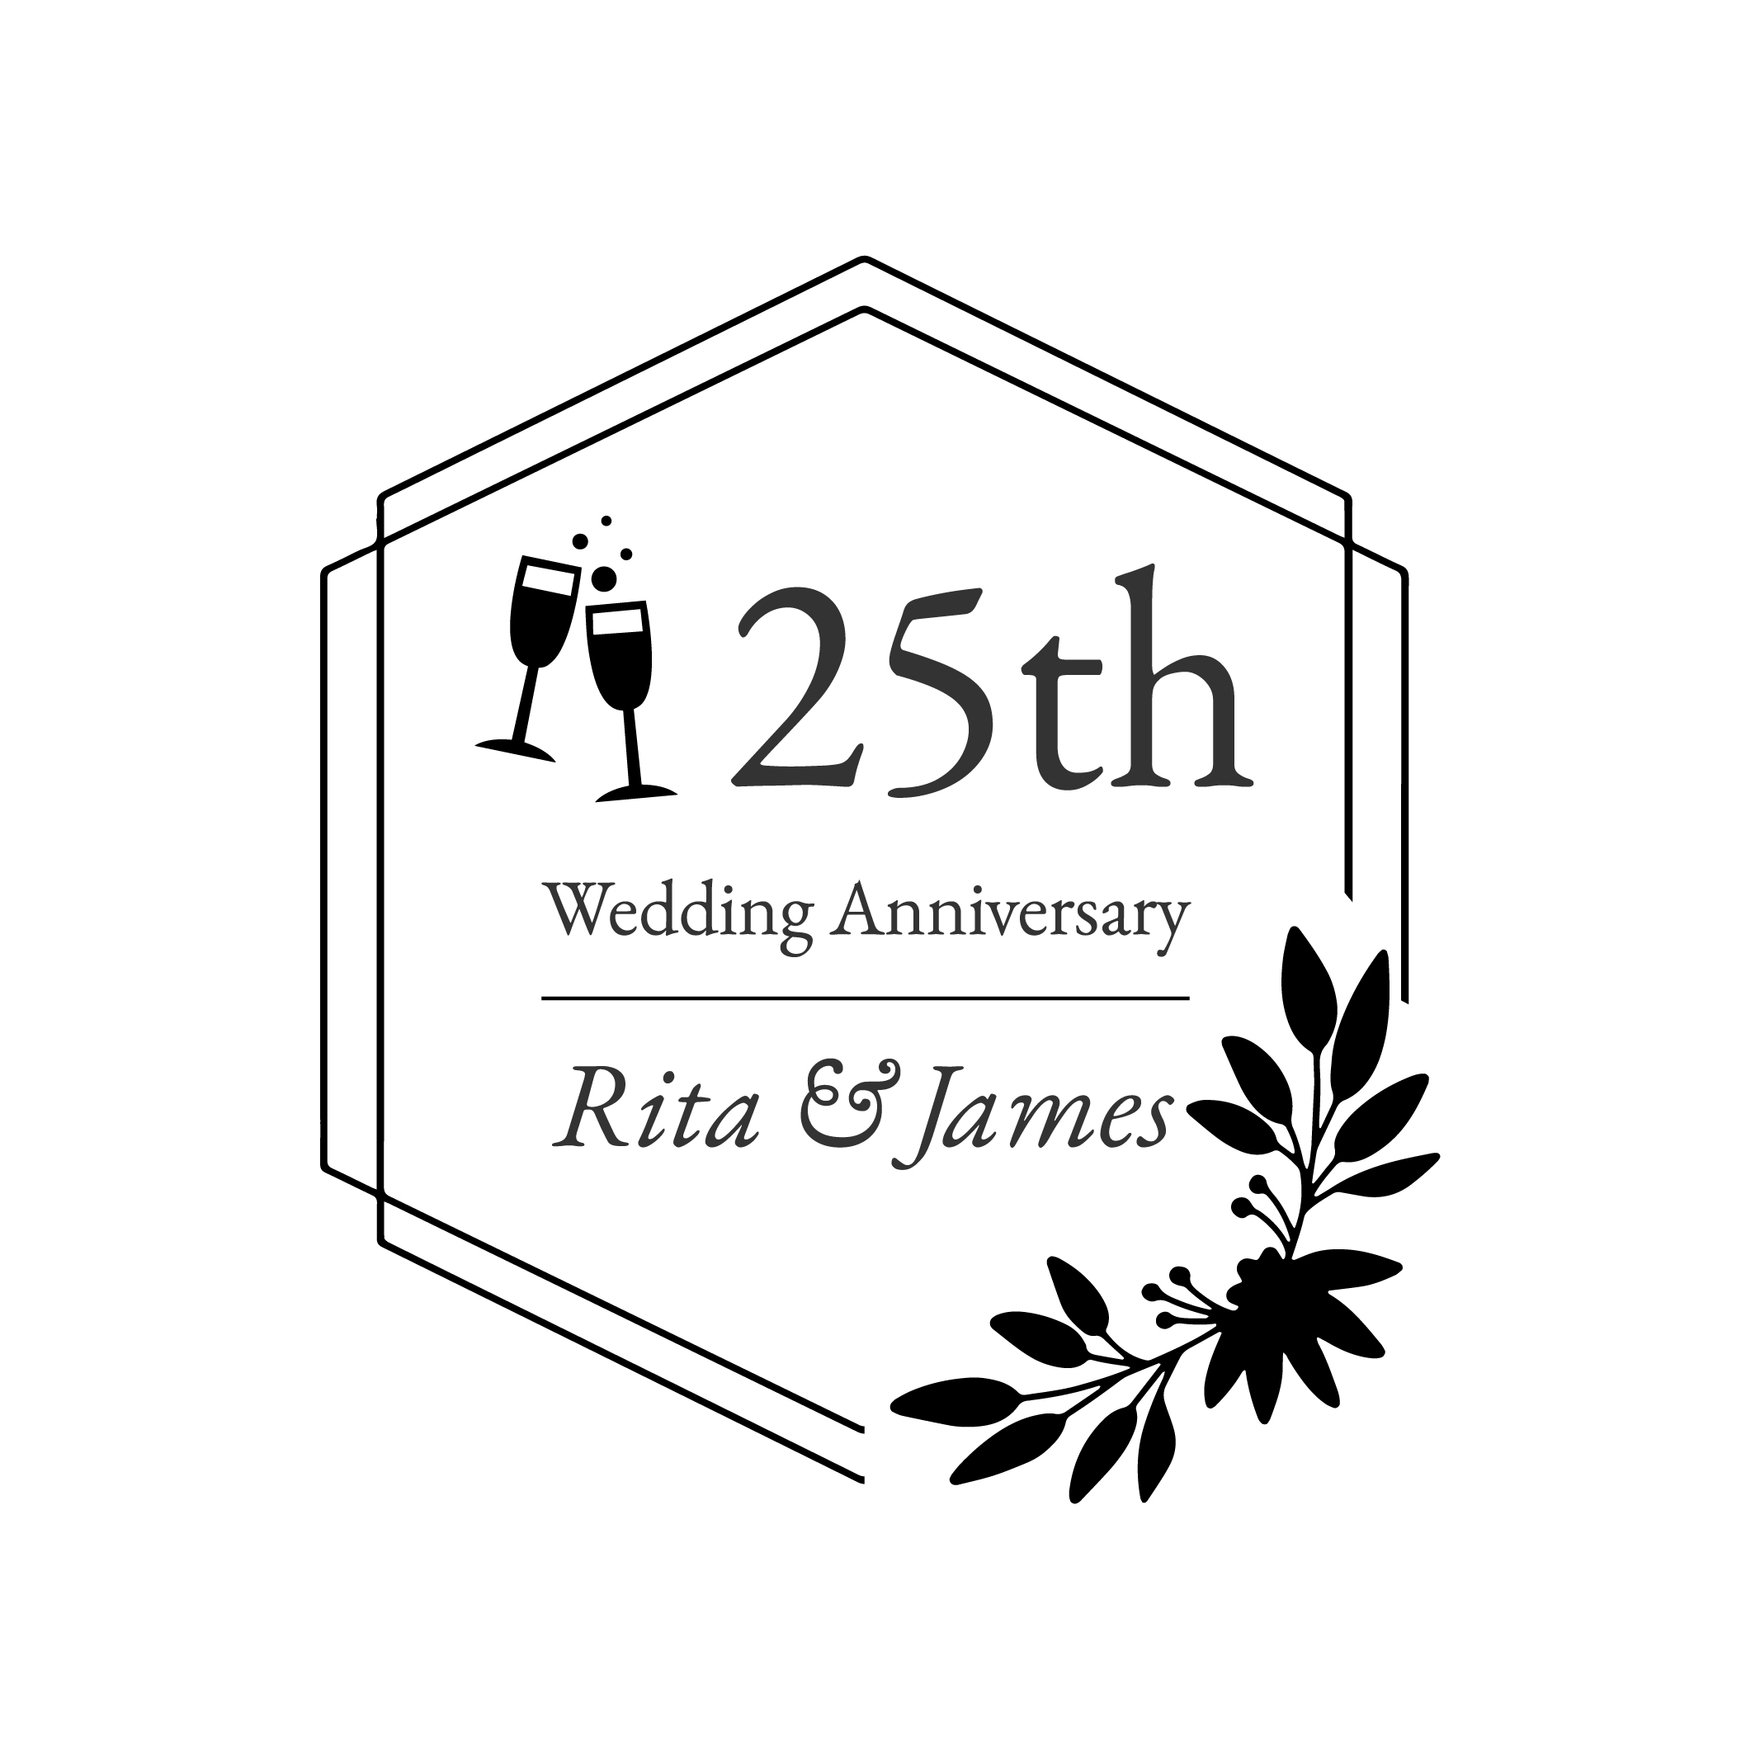 Wedding Anniversary Silhouette in Illustrator, EPS, SVG, JPG, PNG